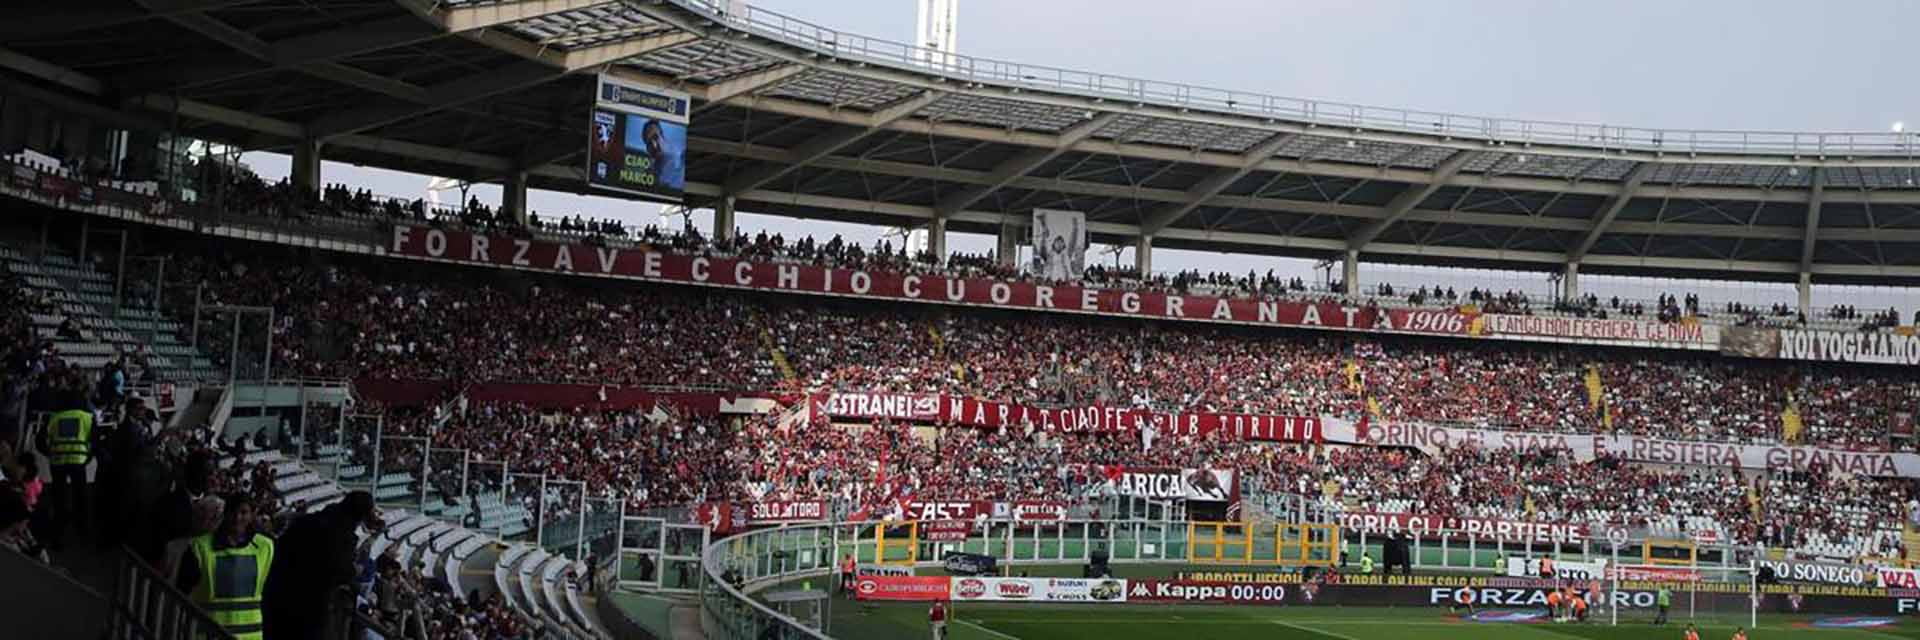 Torino FC - Inter Milan, 7 juinà 0:00